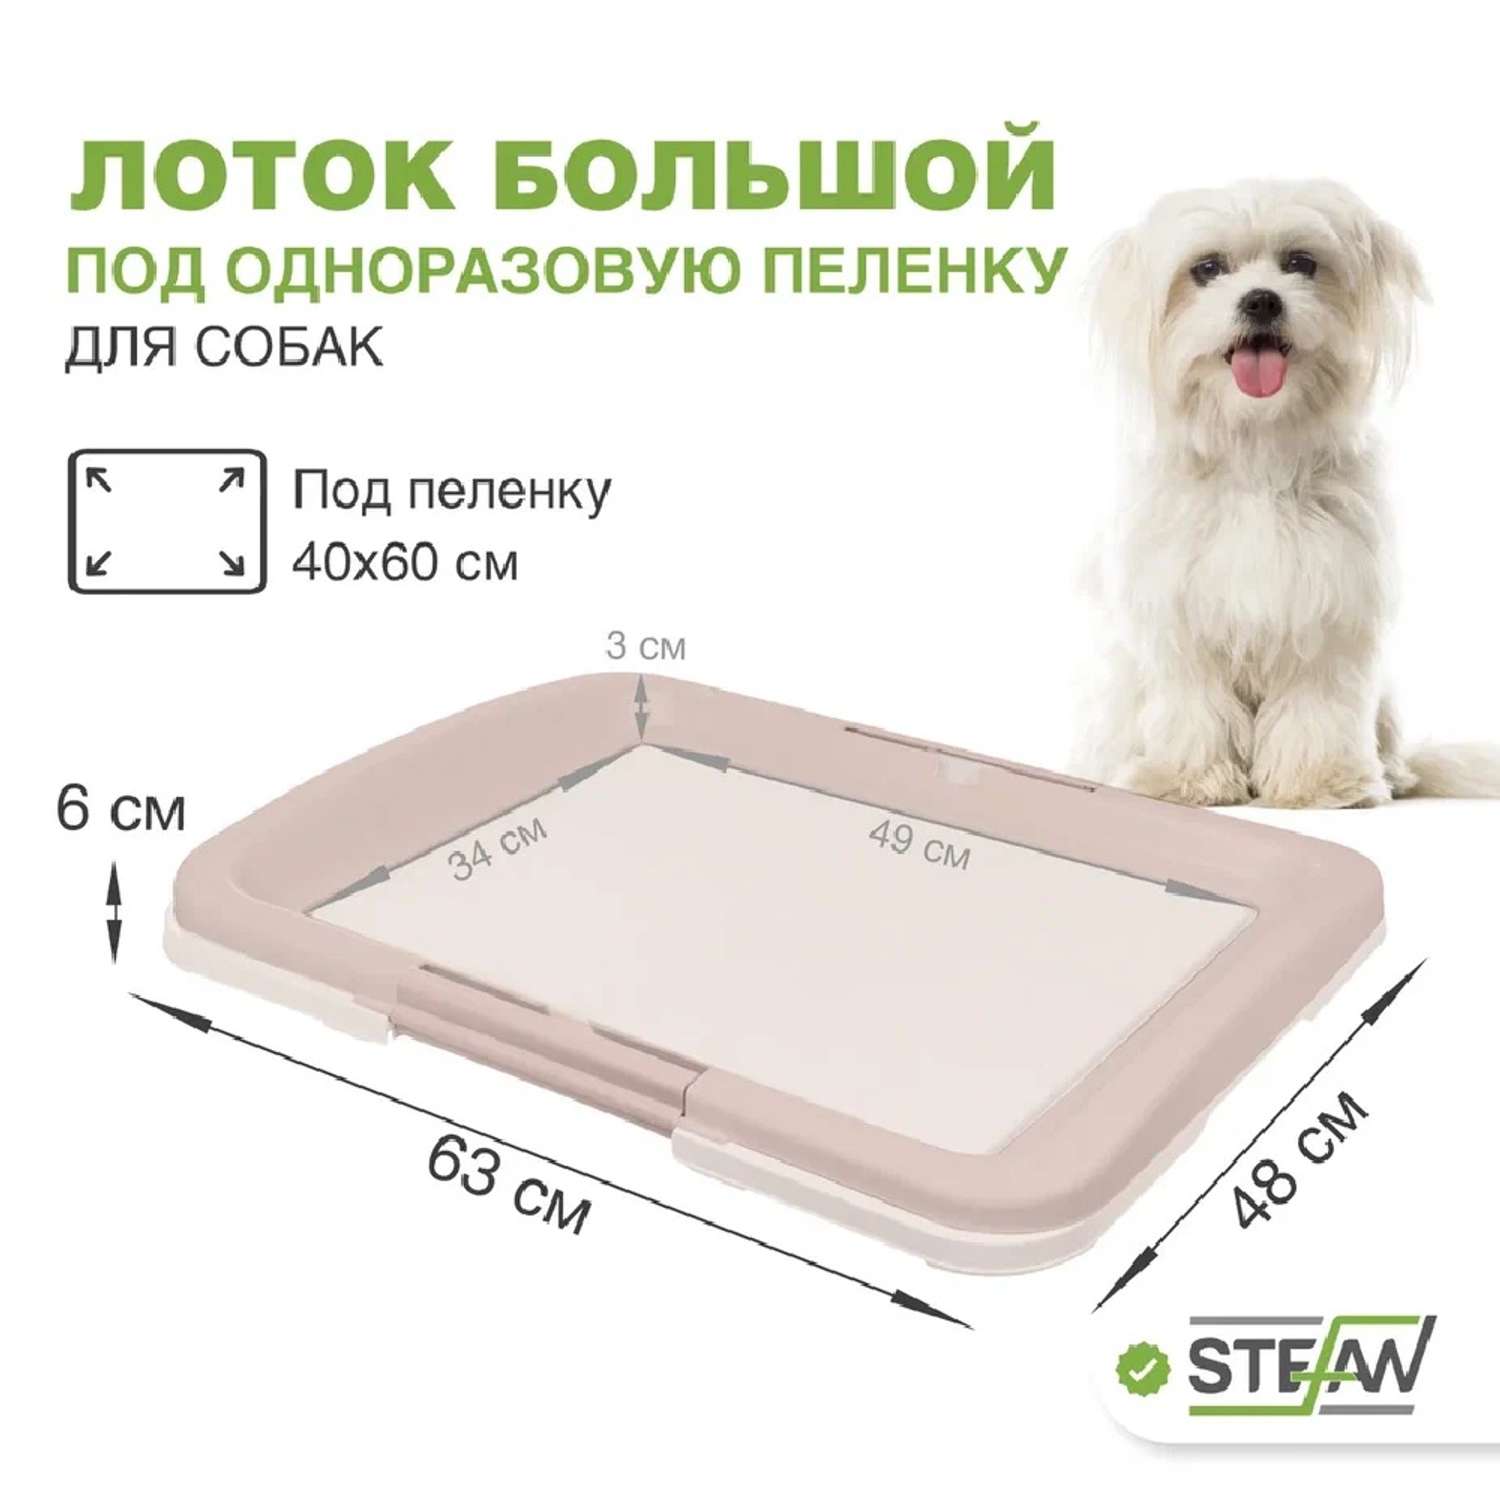 Туалет лоток для собак Stefan под одноразовую пеленку большой L размер 63x49x6 бежевый - фото 1